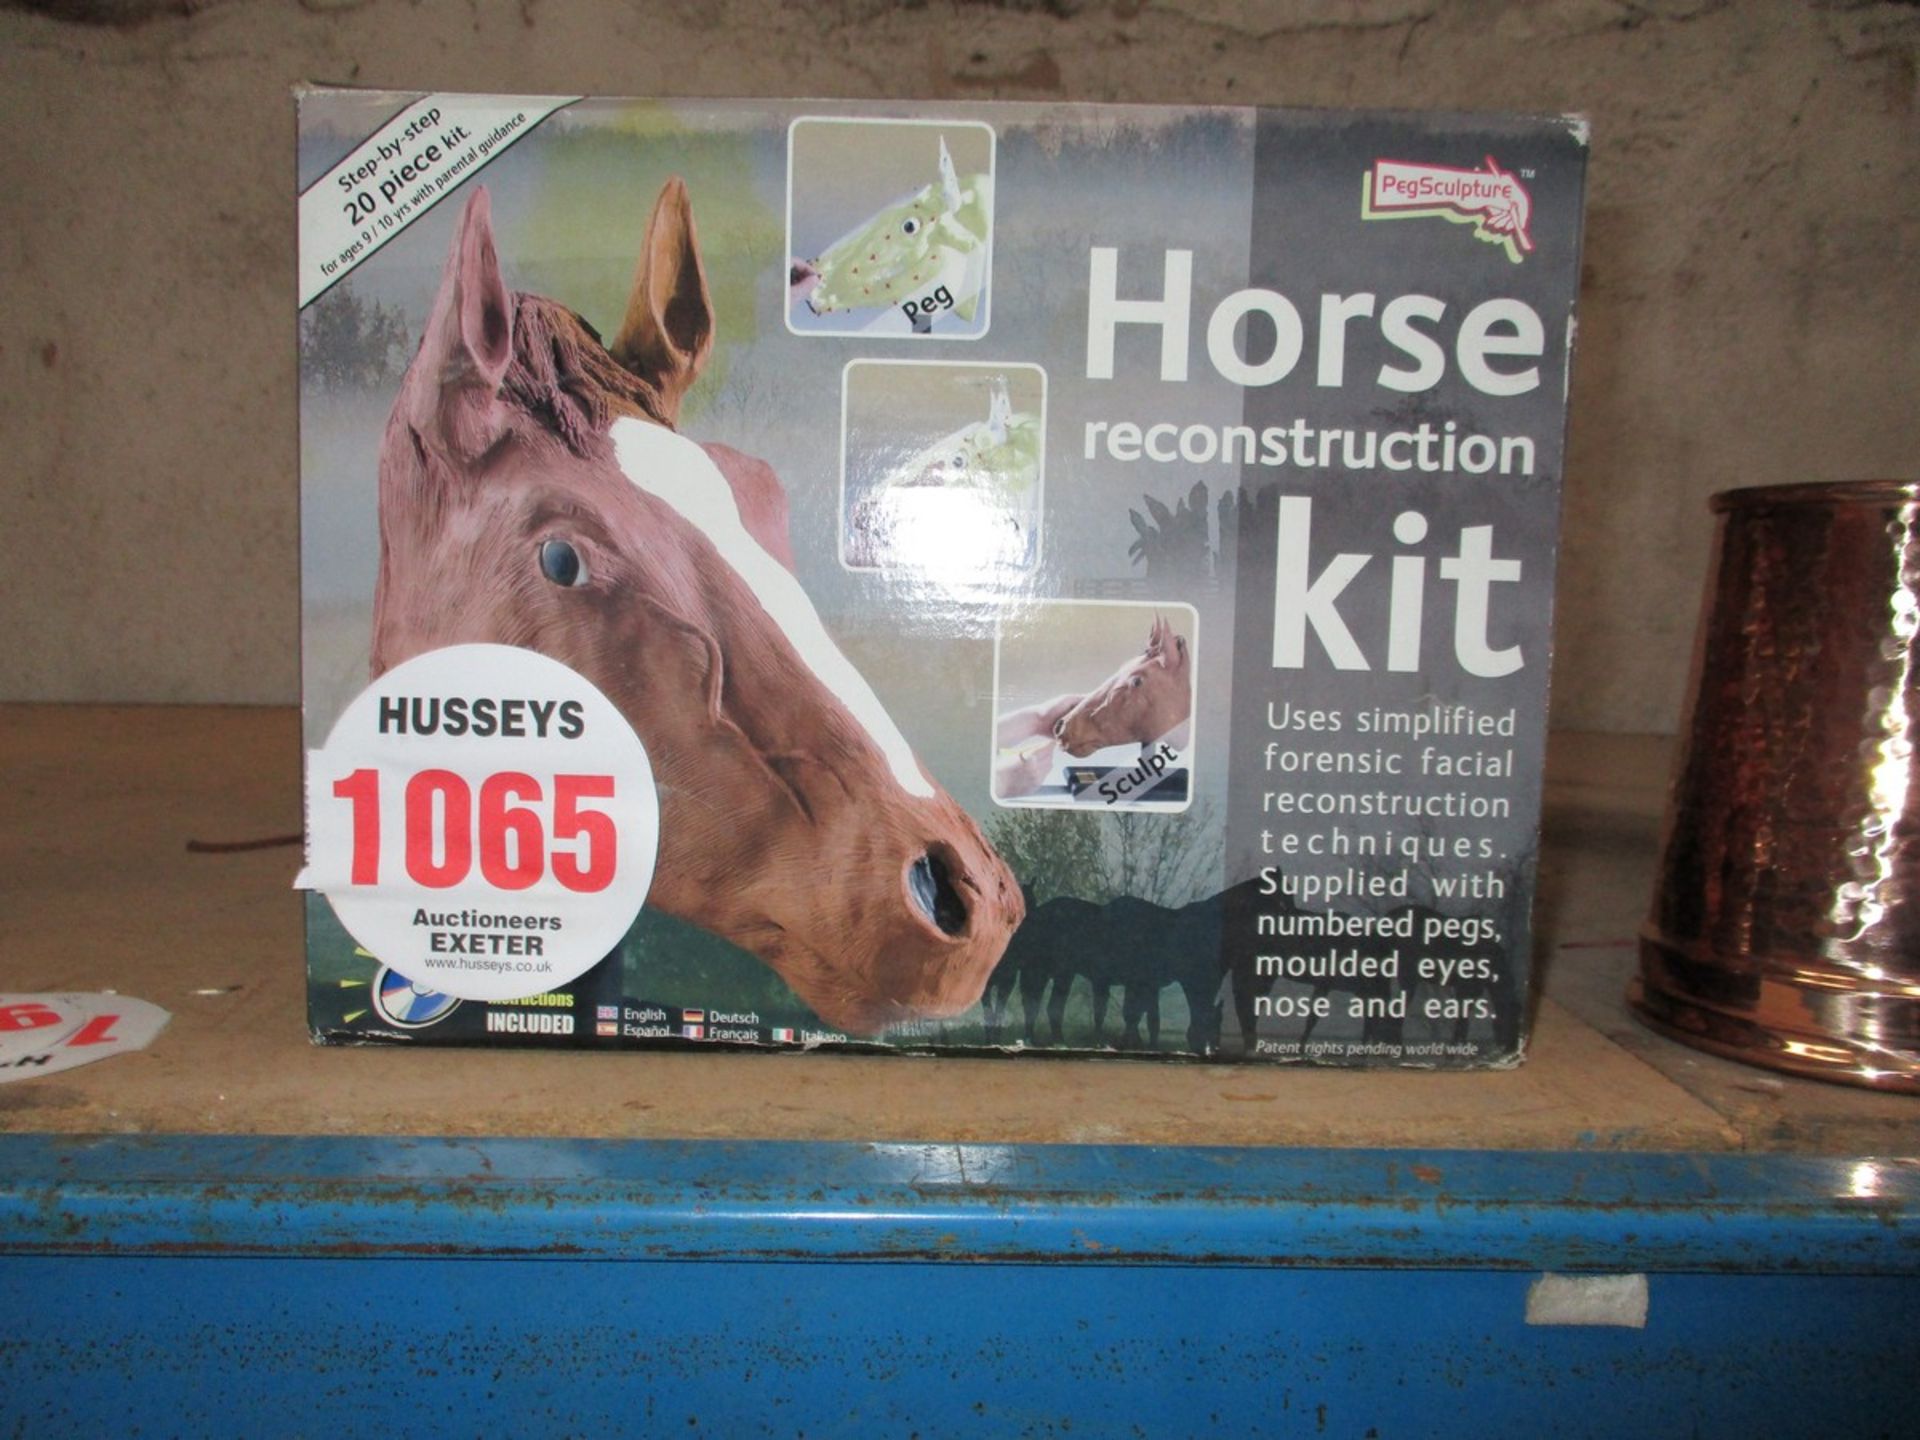 HORSE HEAD